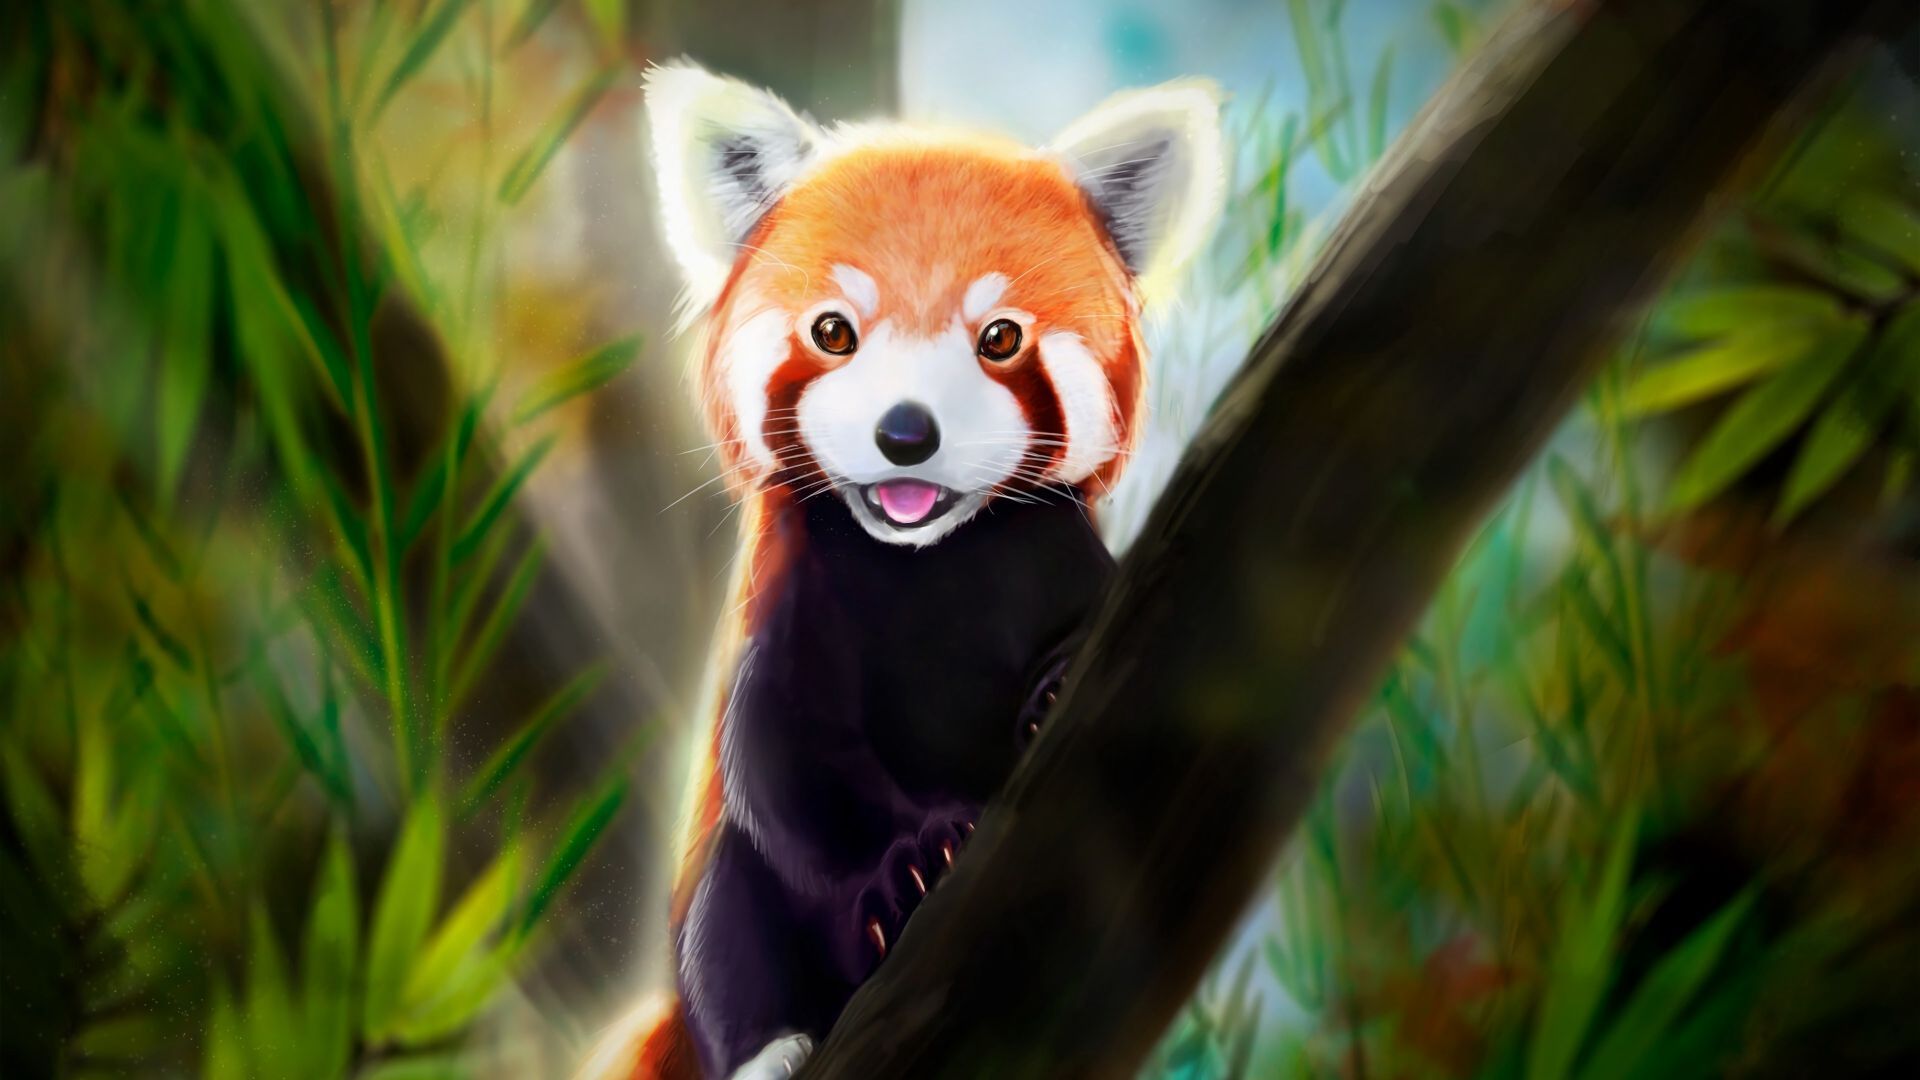 cute anime red panda